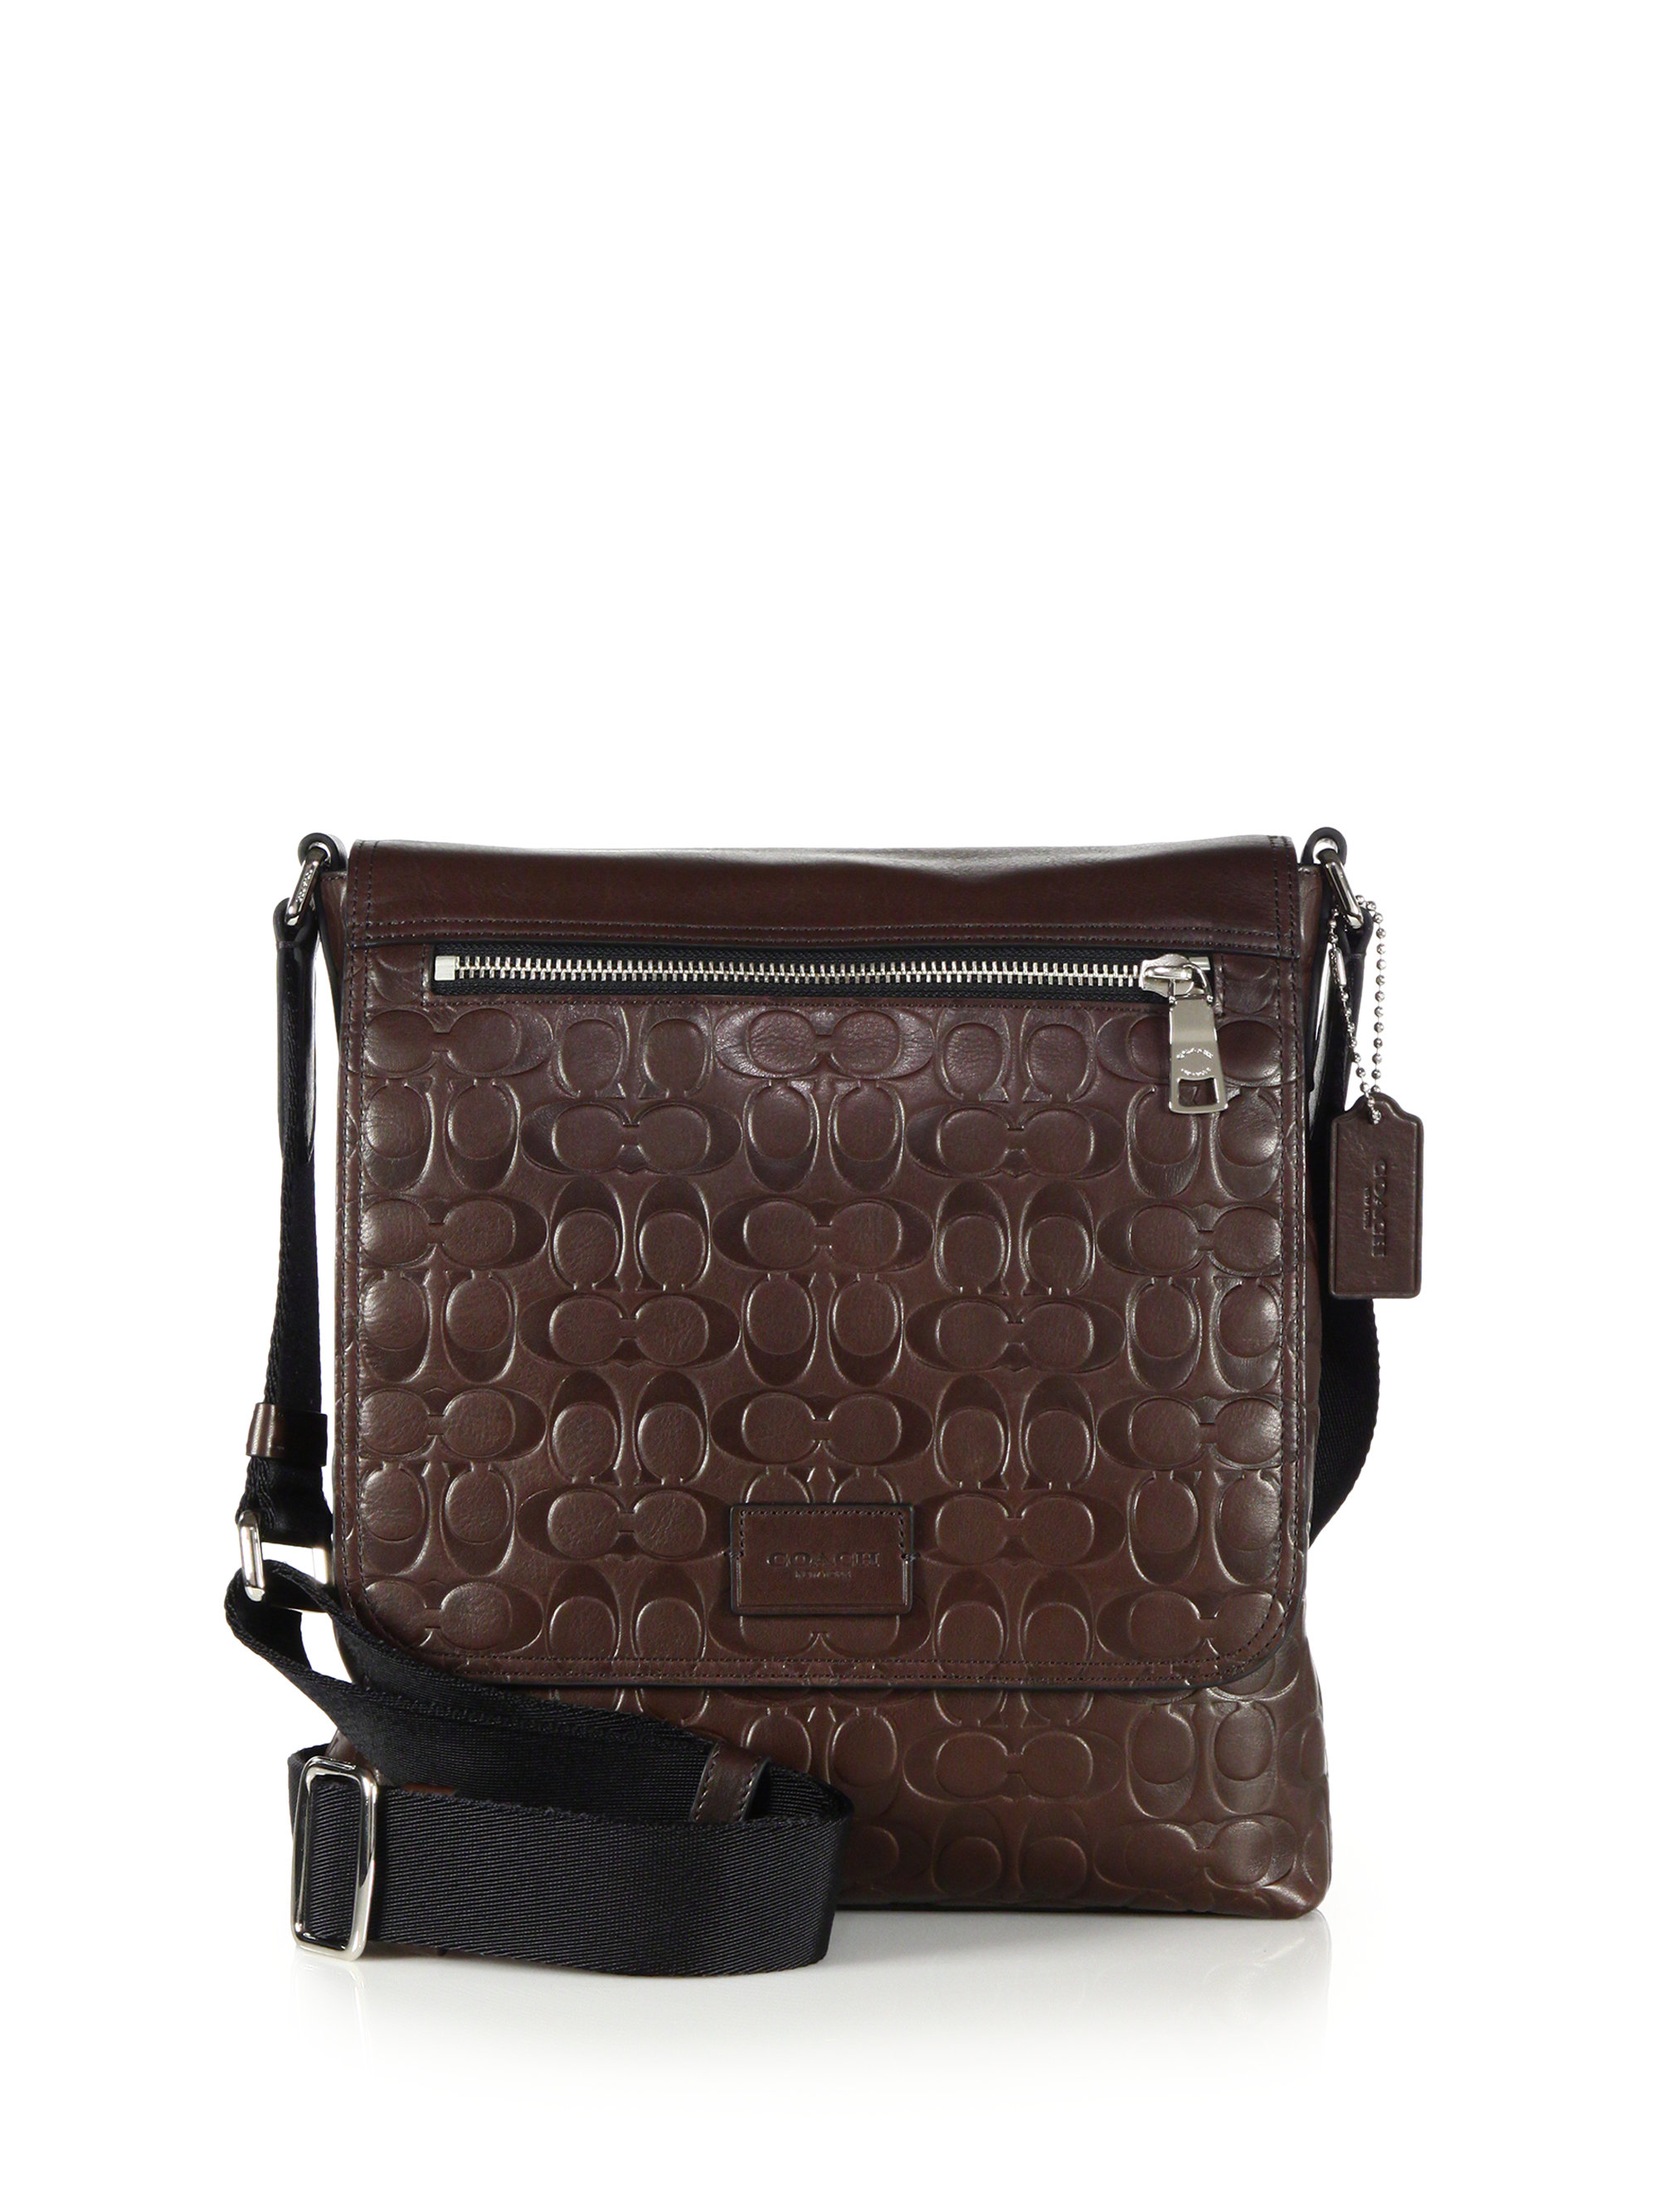 COACH Sullivan Calfskin Leather Crossbody Bag in Dark Brown (Brown) for Men - Lyst